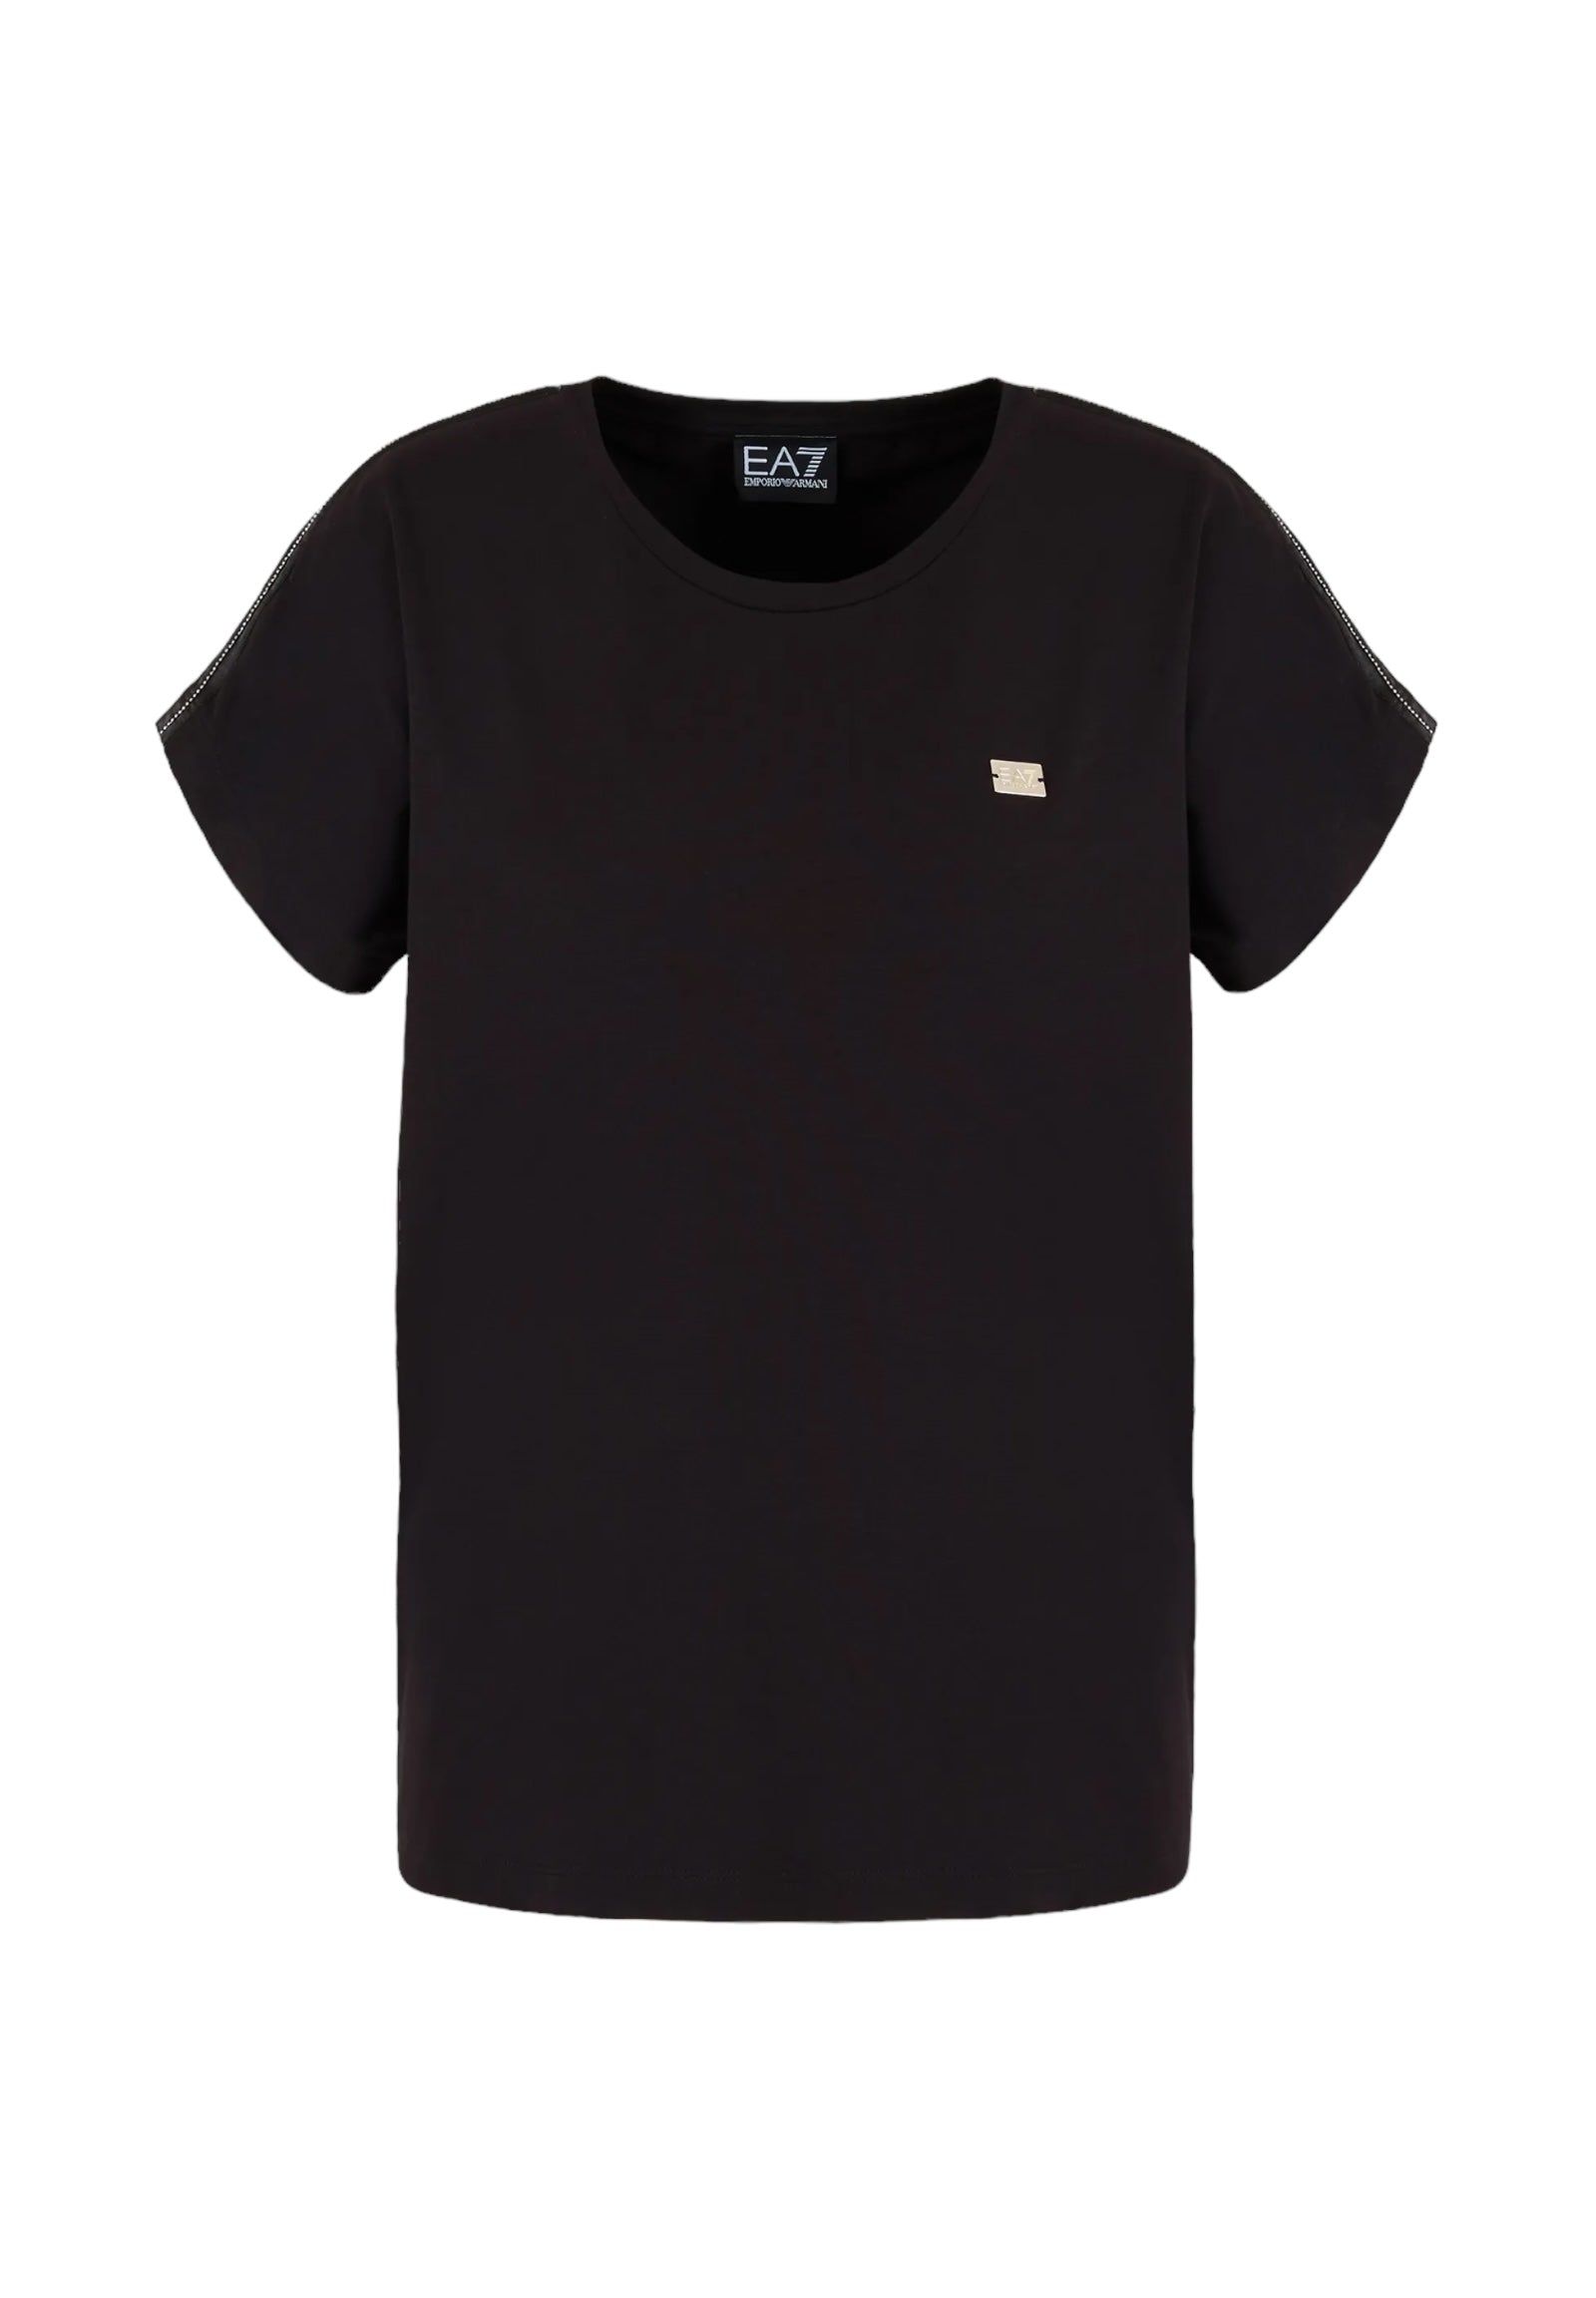 3dtt41 Black T-Shirt